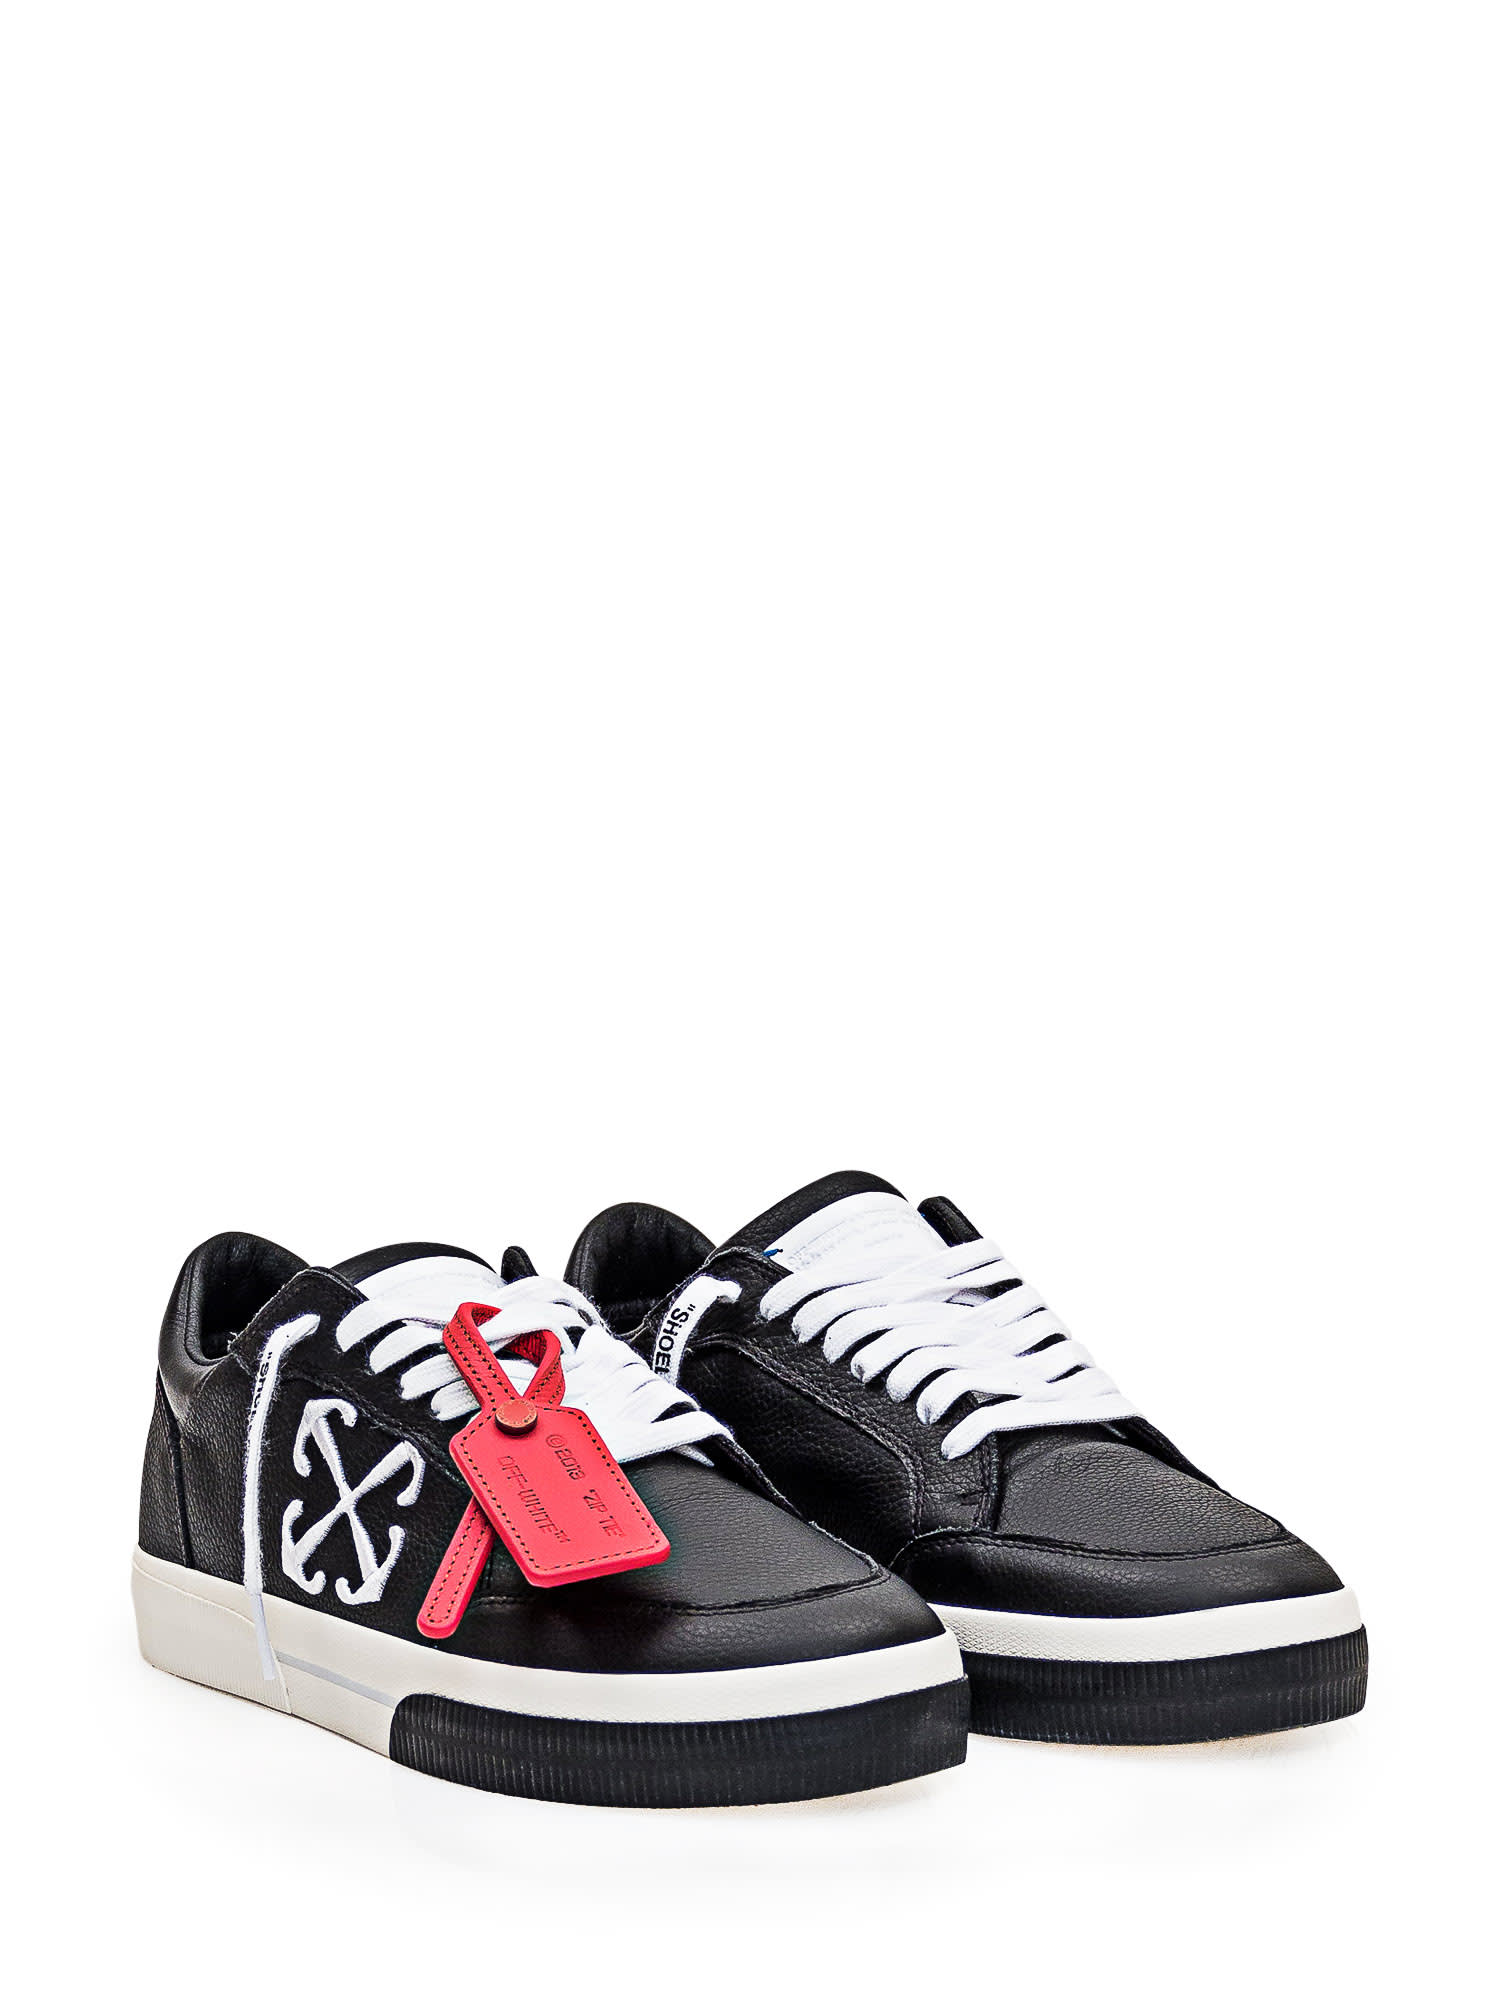 Shop Off-white New Low Vulcanized Sneaker In Black White